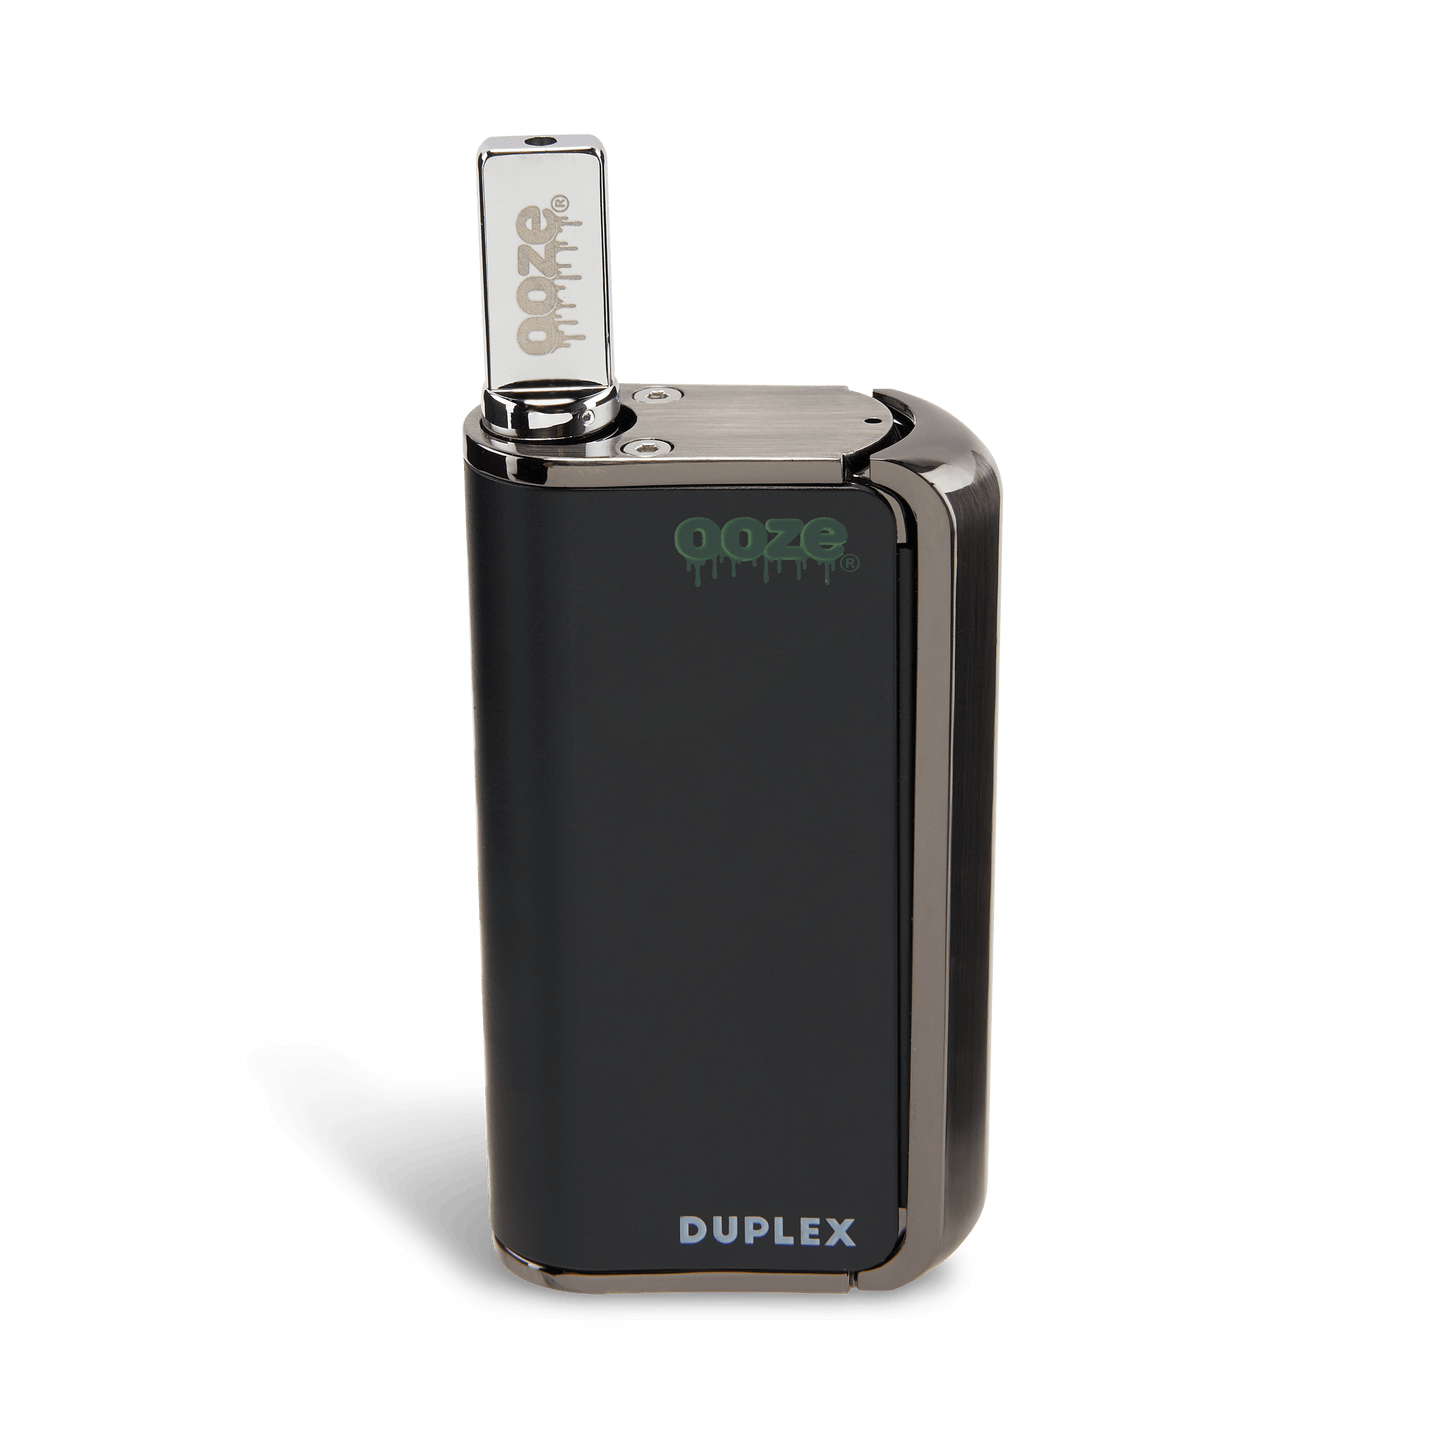 Ooze Batteries and Vapes Ooze Duplex Pro – 900 mAh – Cartridge & Wax Vaporizer